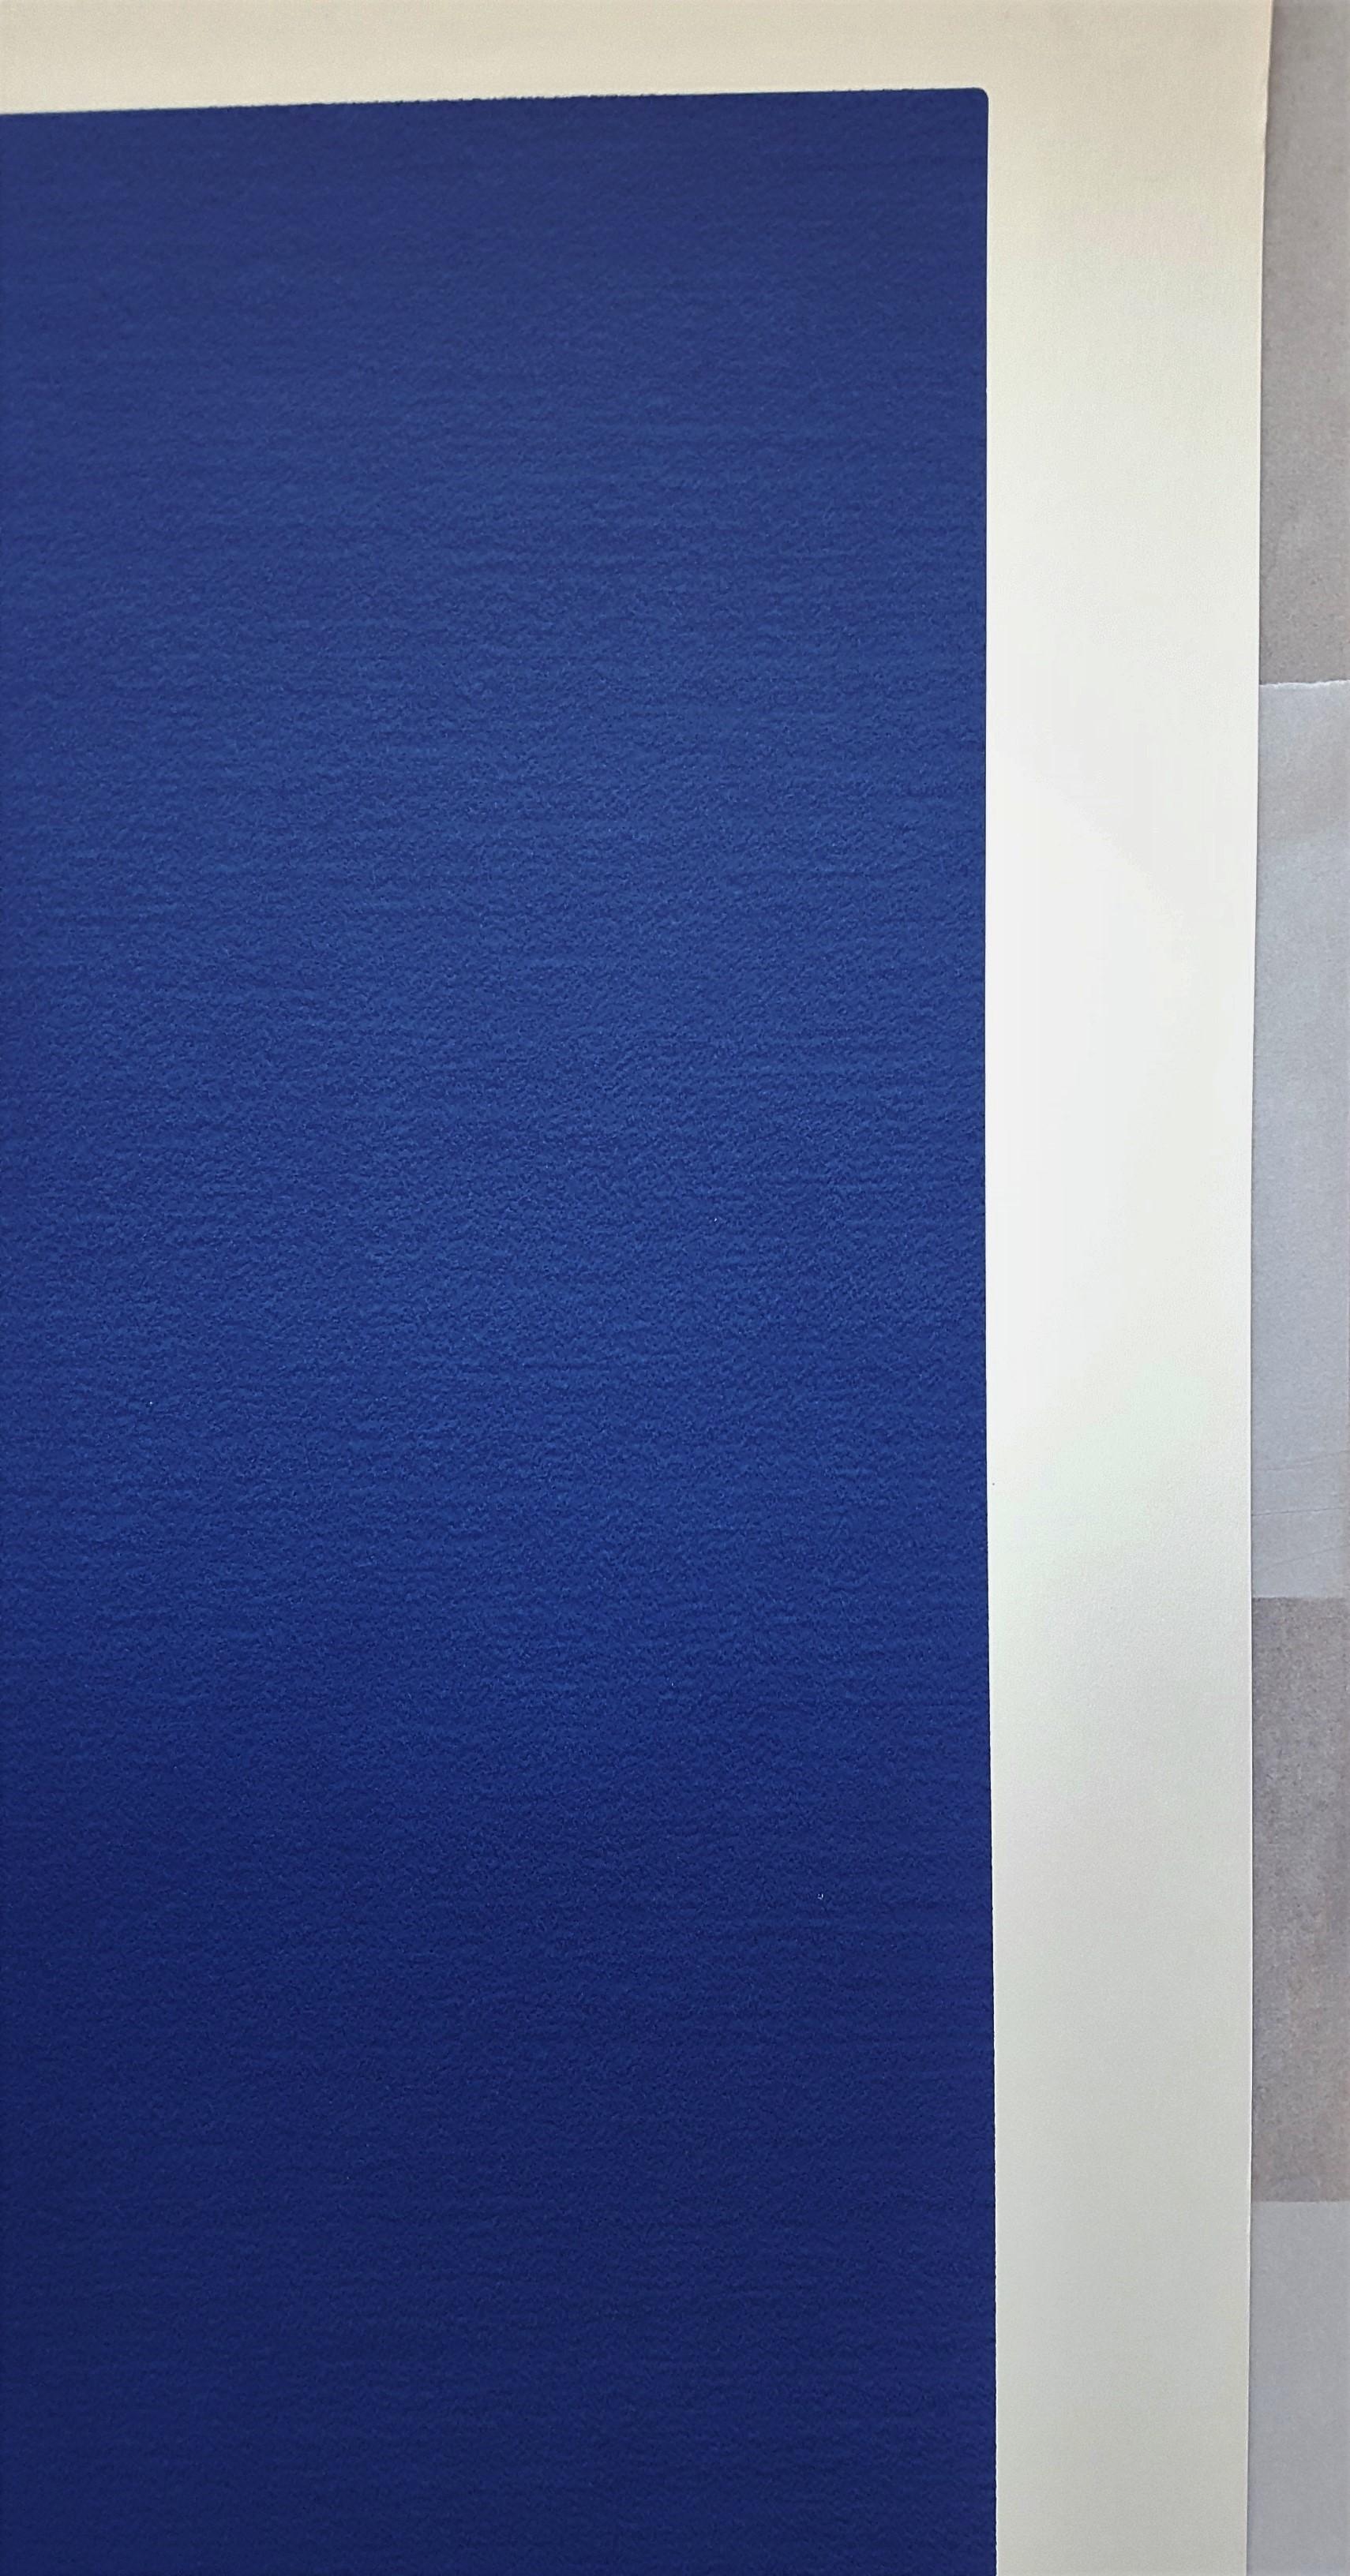 Monochrome Bleu (IKB 3) - Blue Abstract Print by Yves Klein